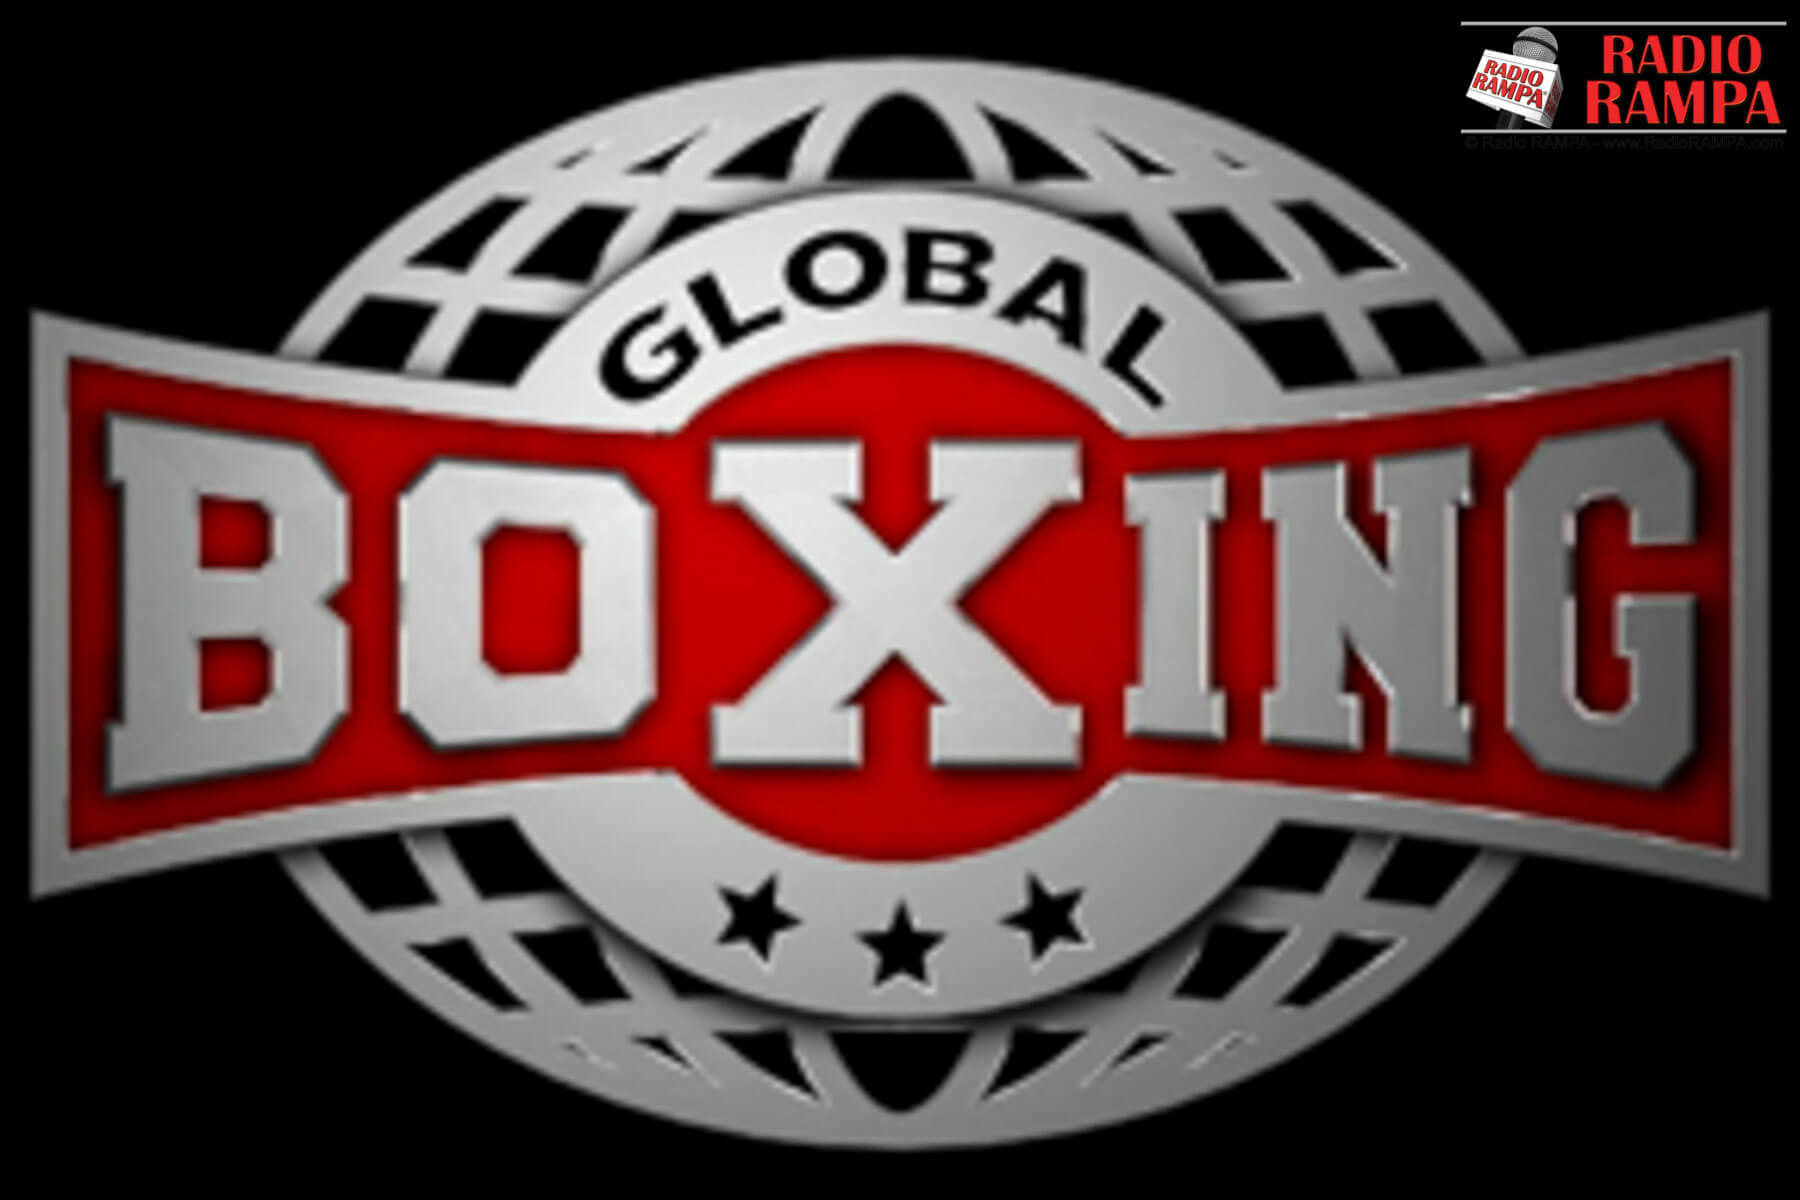 Global Boxing Training